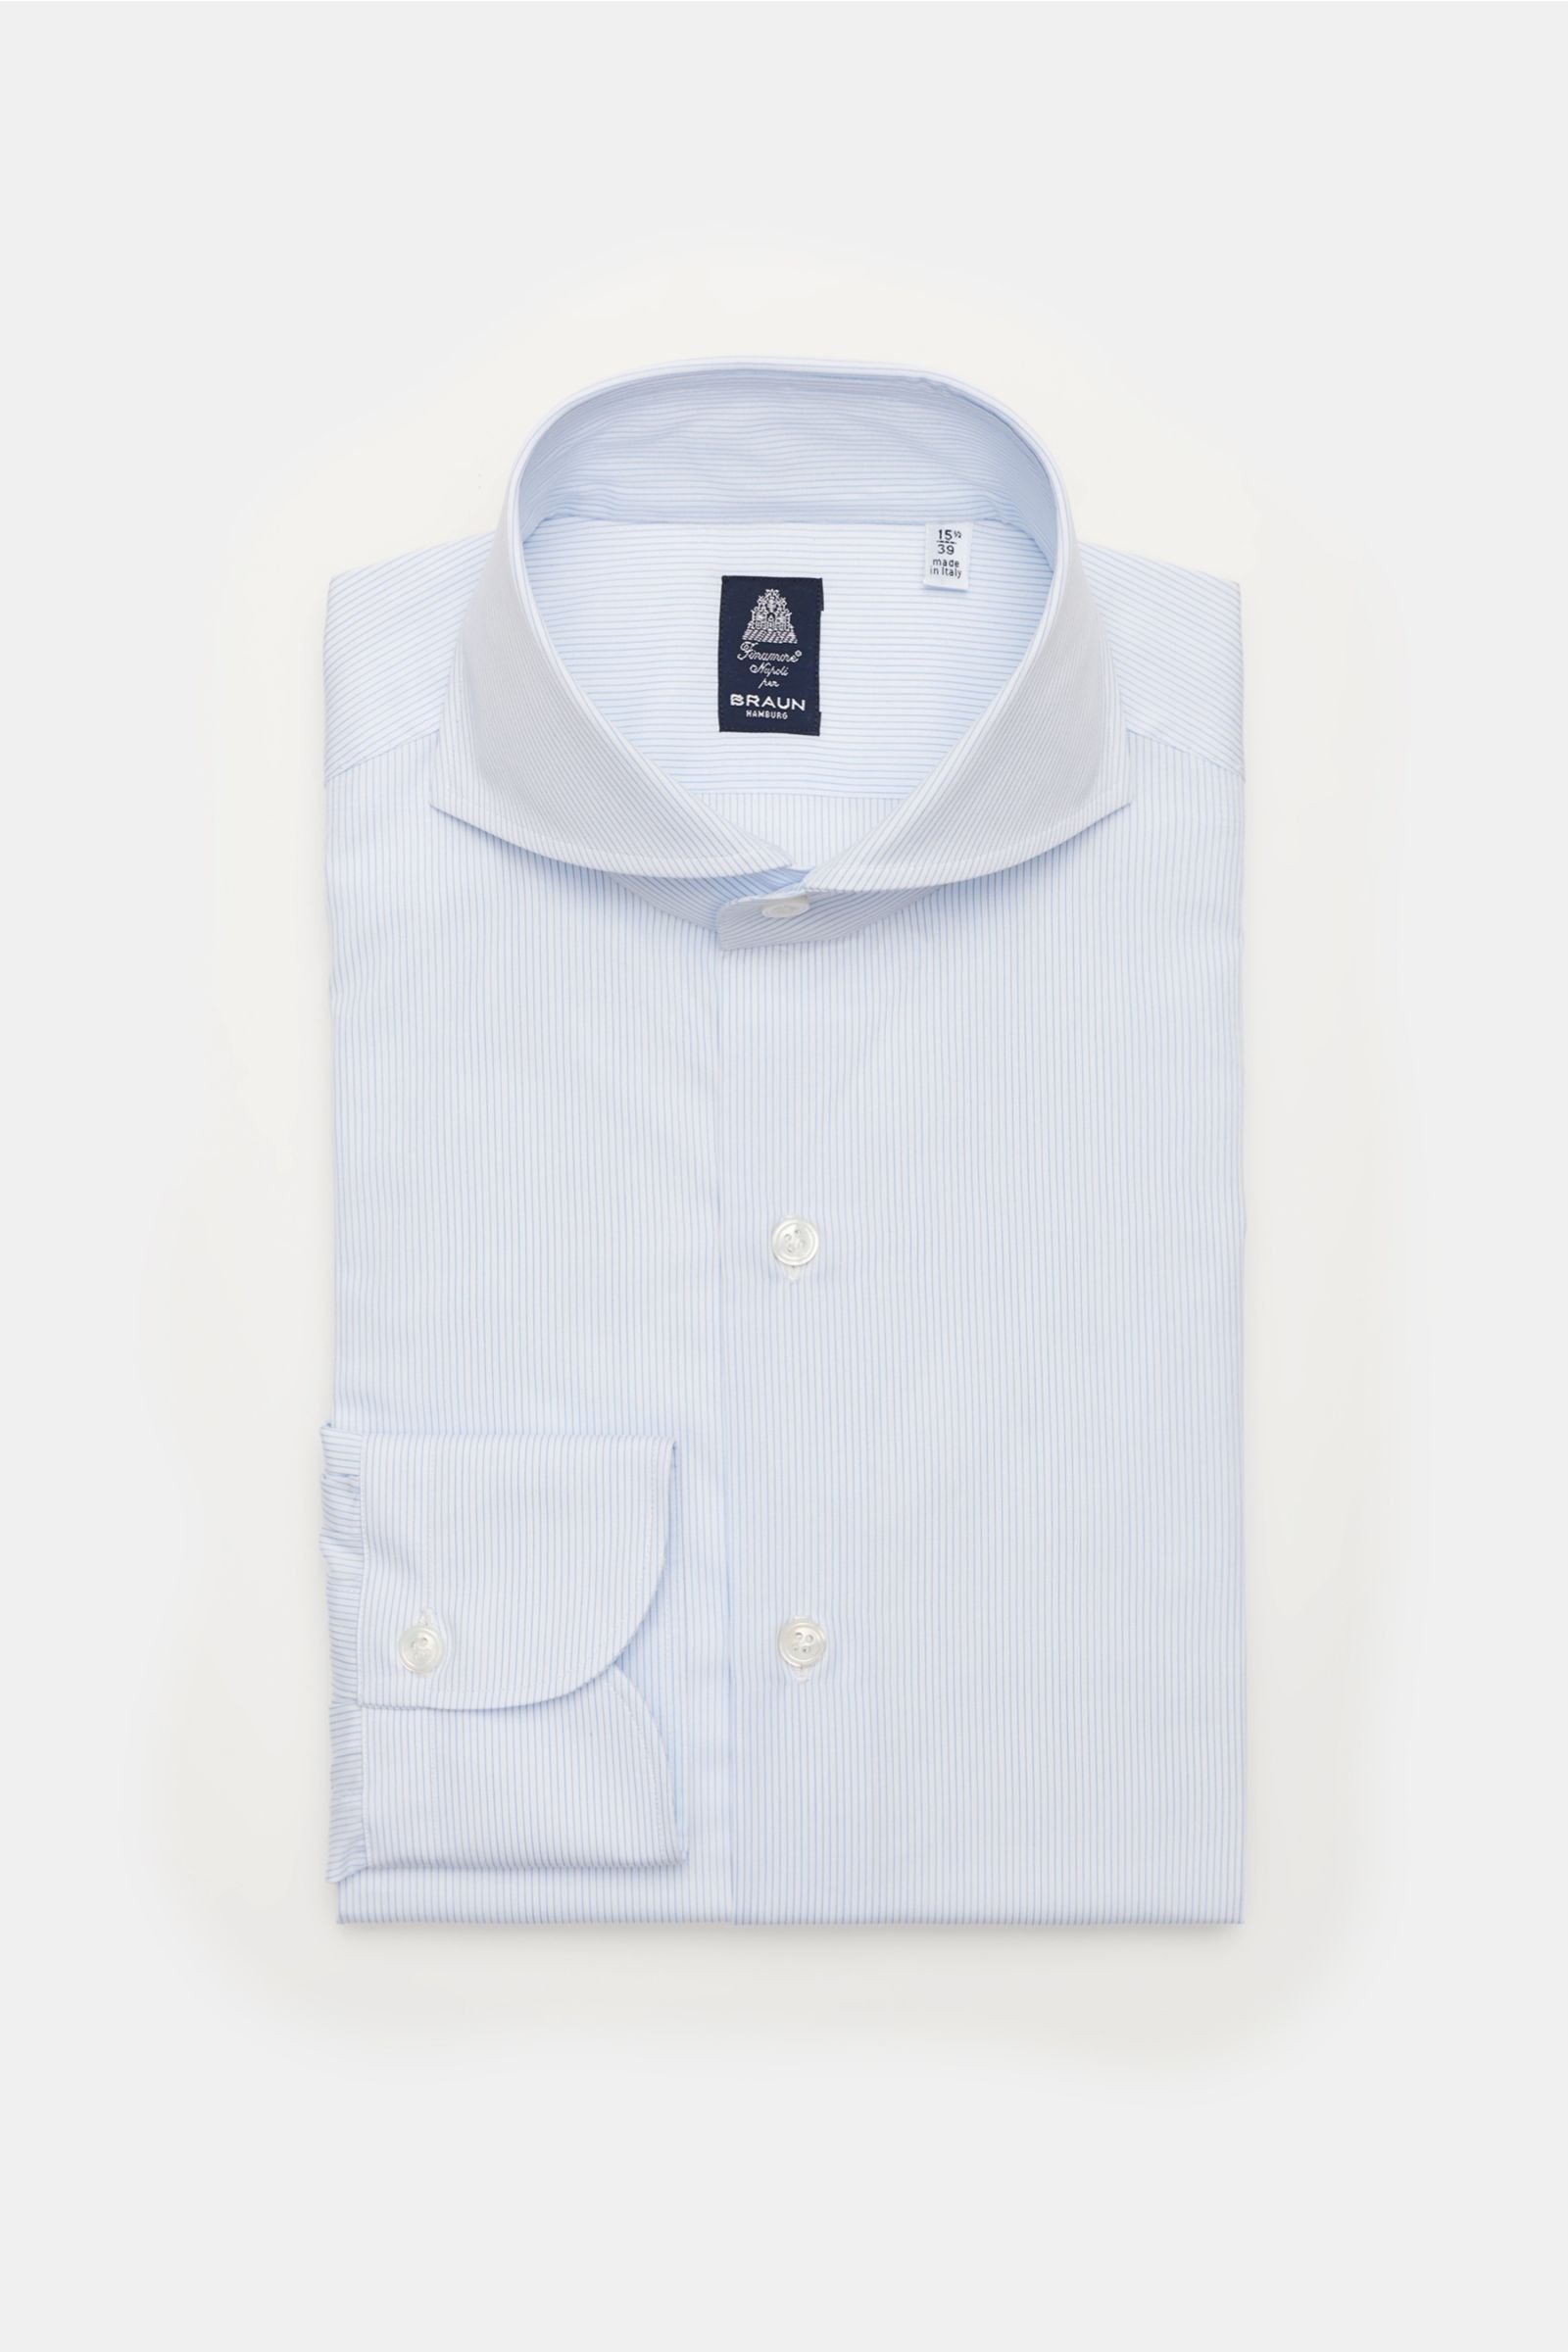 Business shirt 'Sergio Napoli' shark collar white/light blue striped